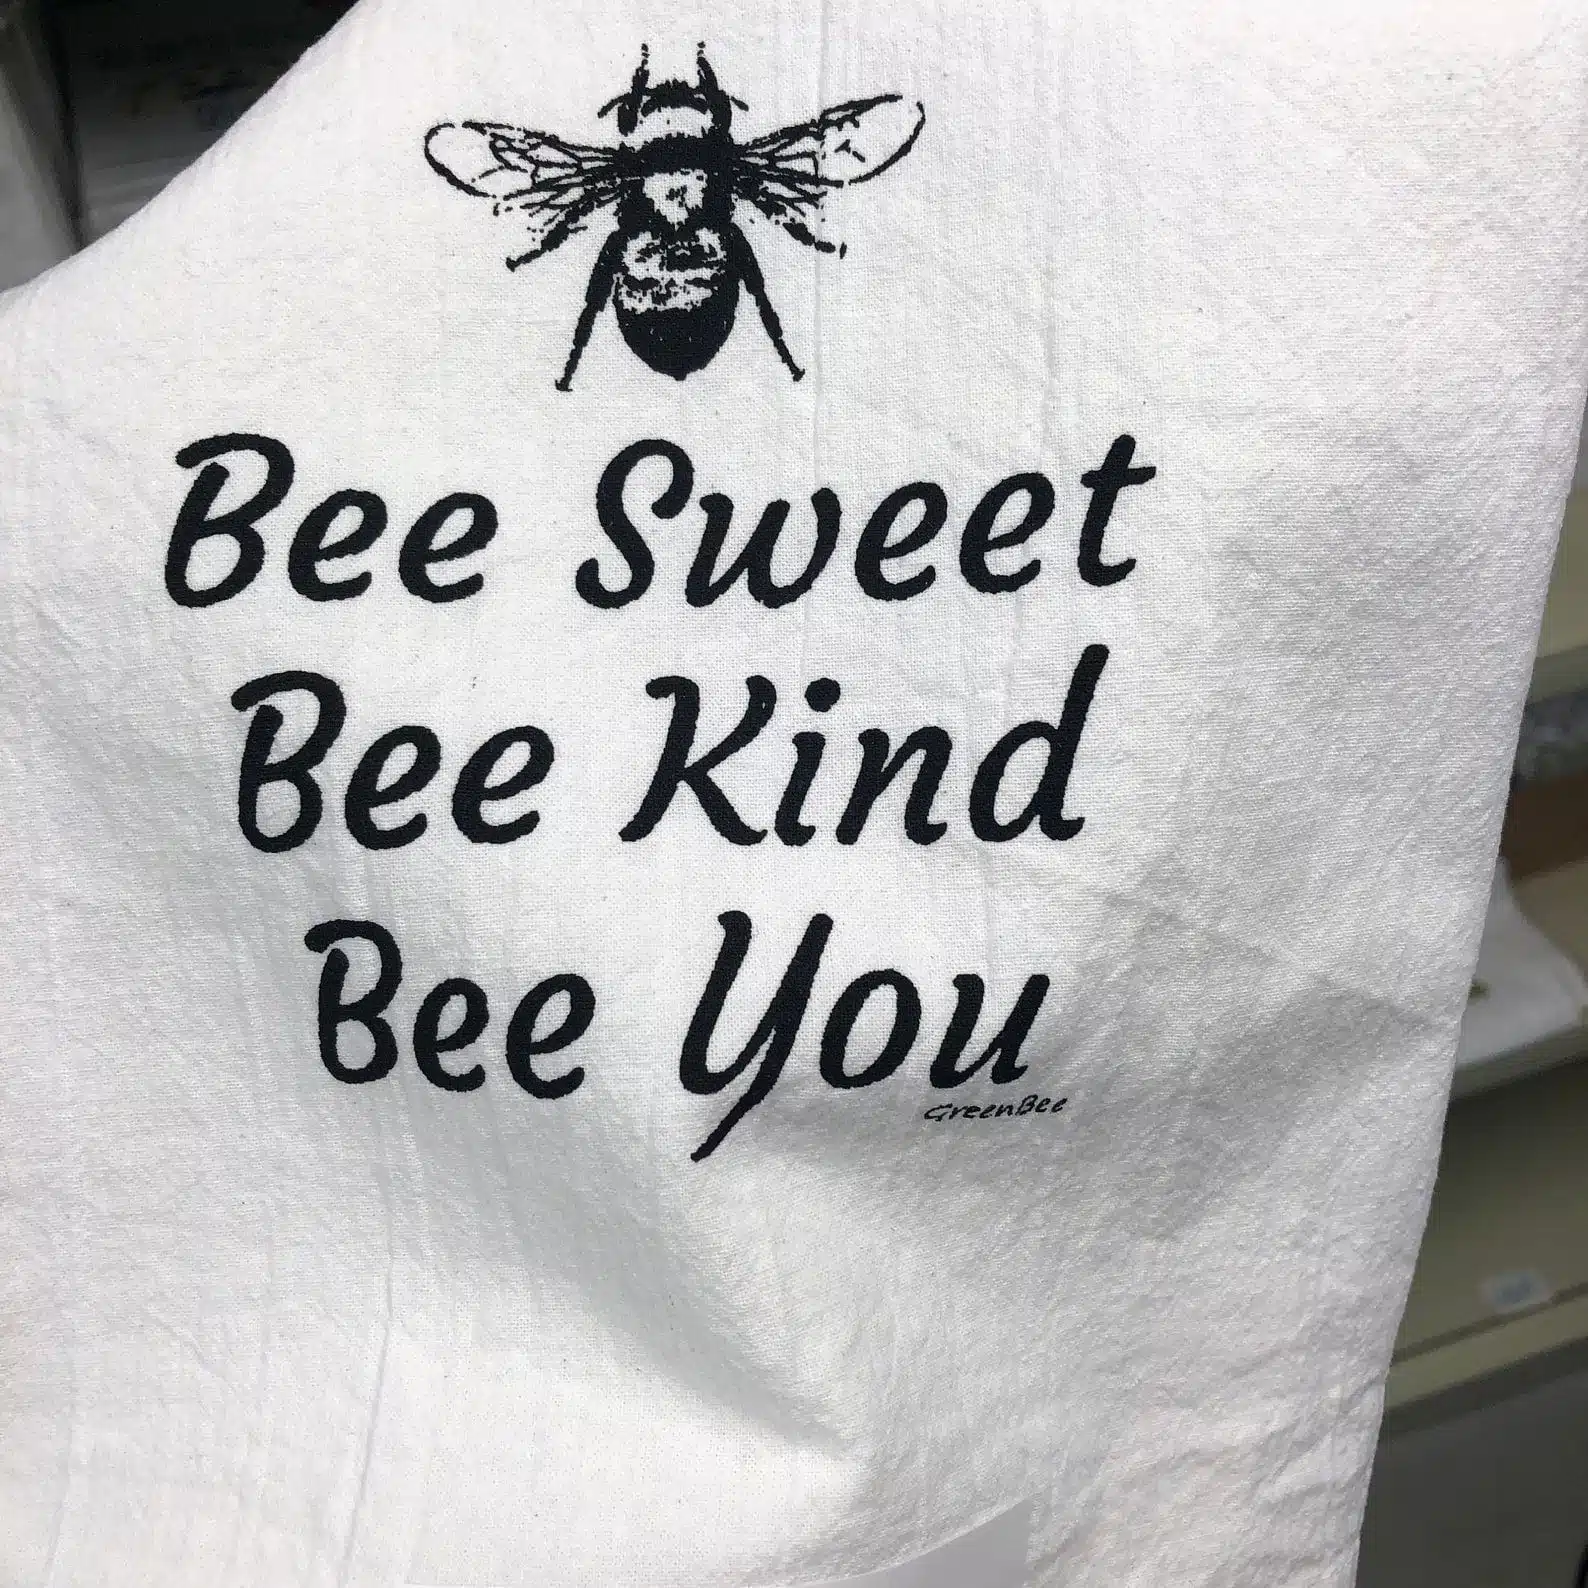 Handprinted Bumble Bee Tea Towel 